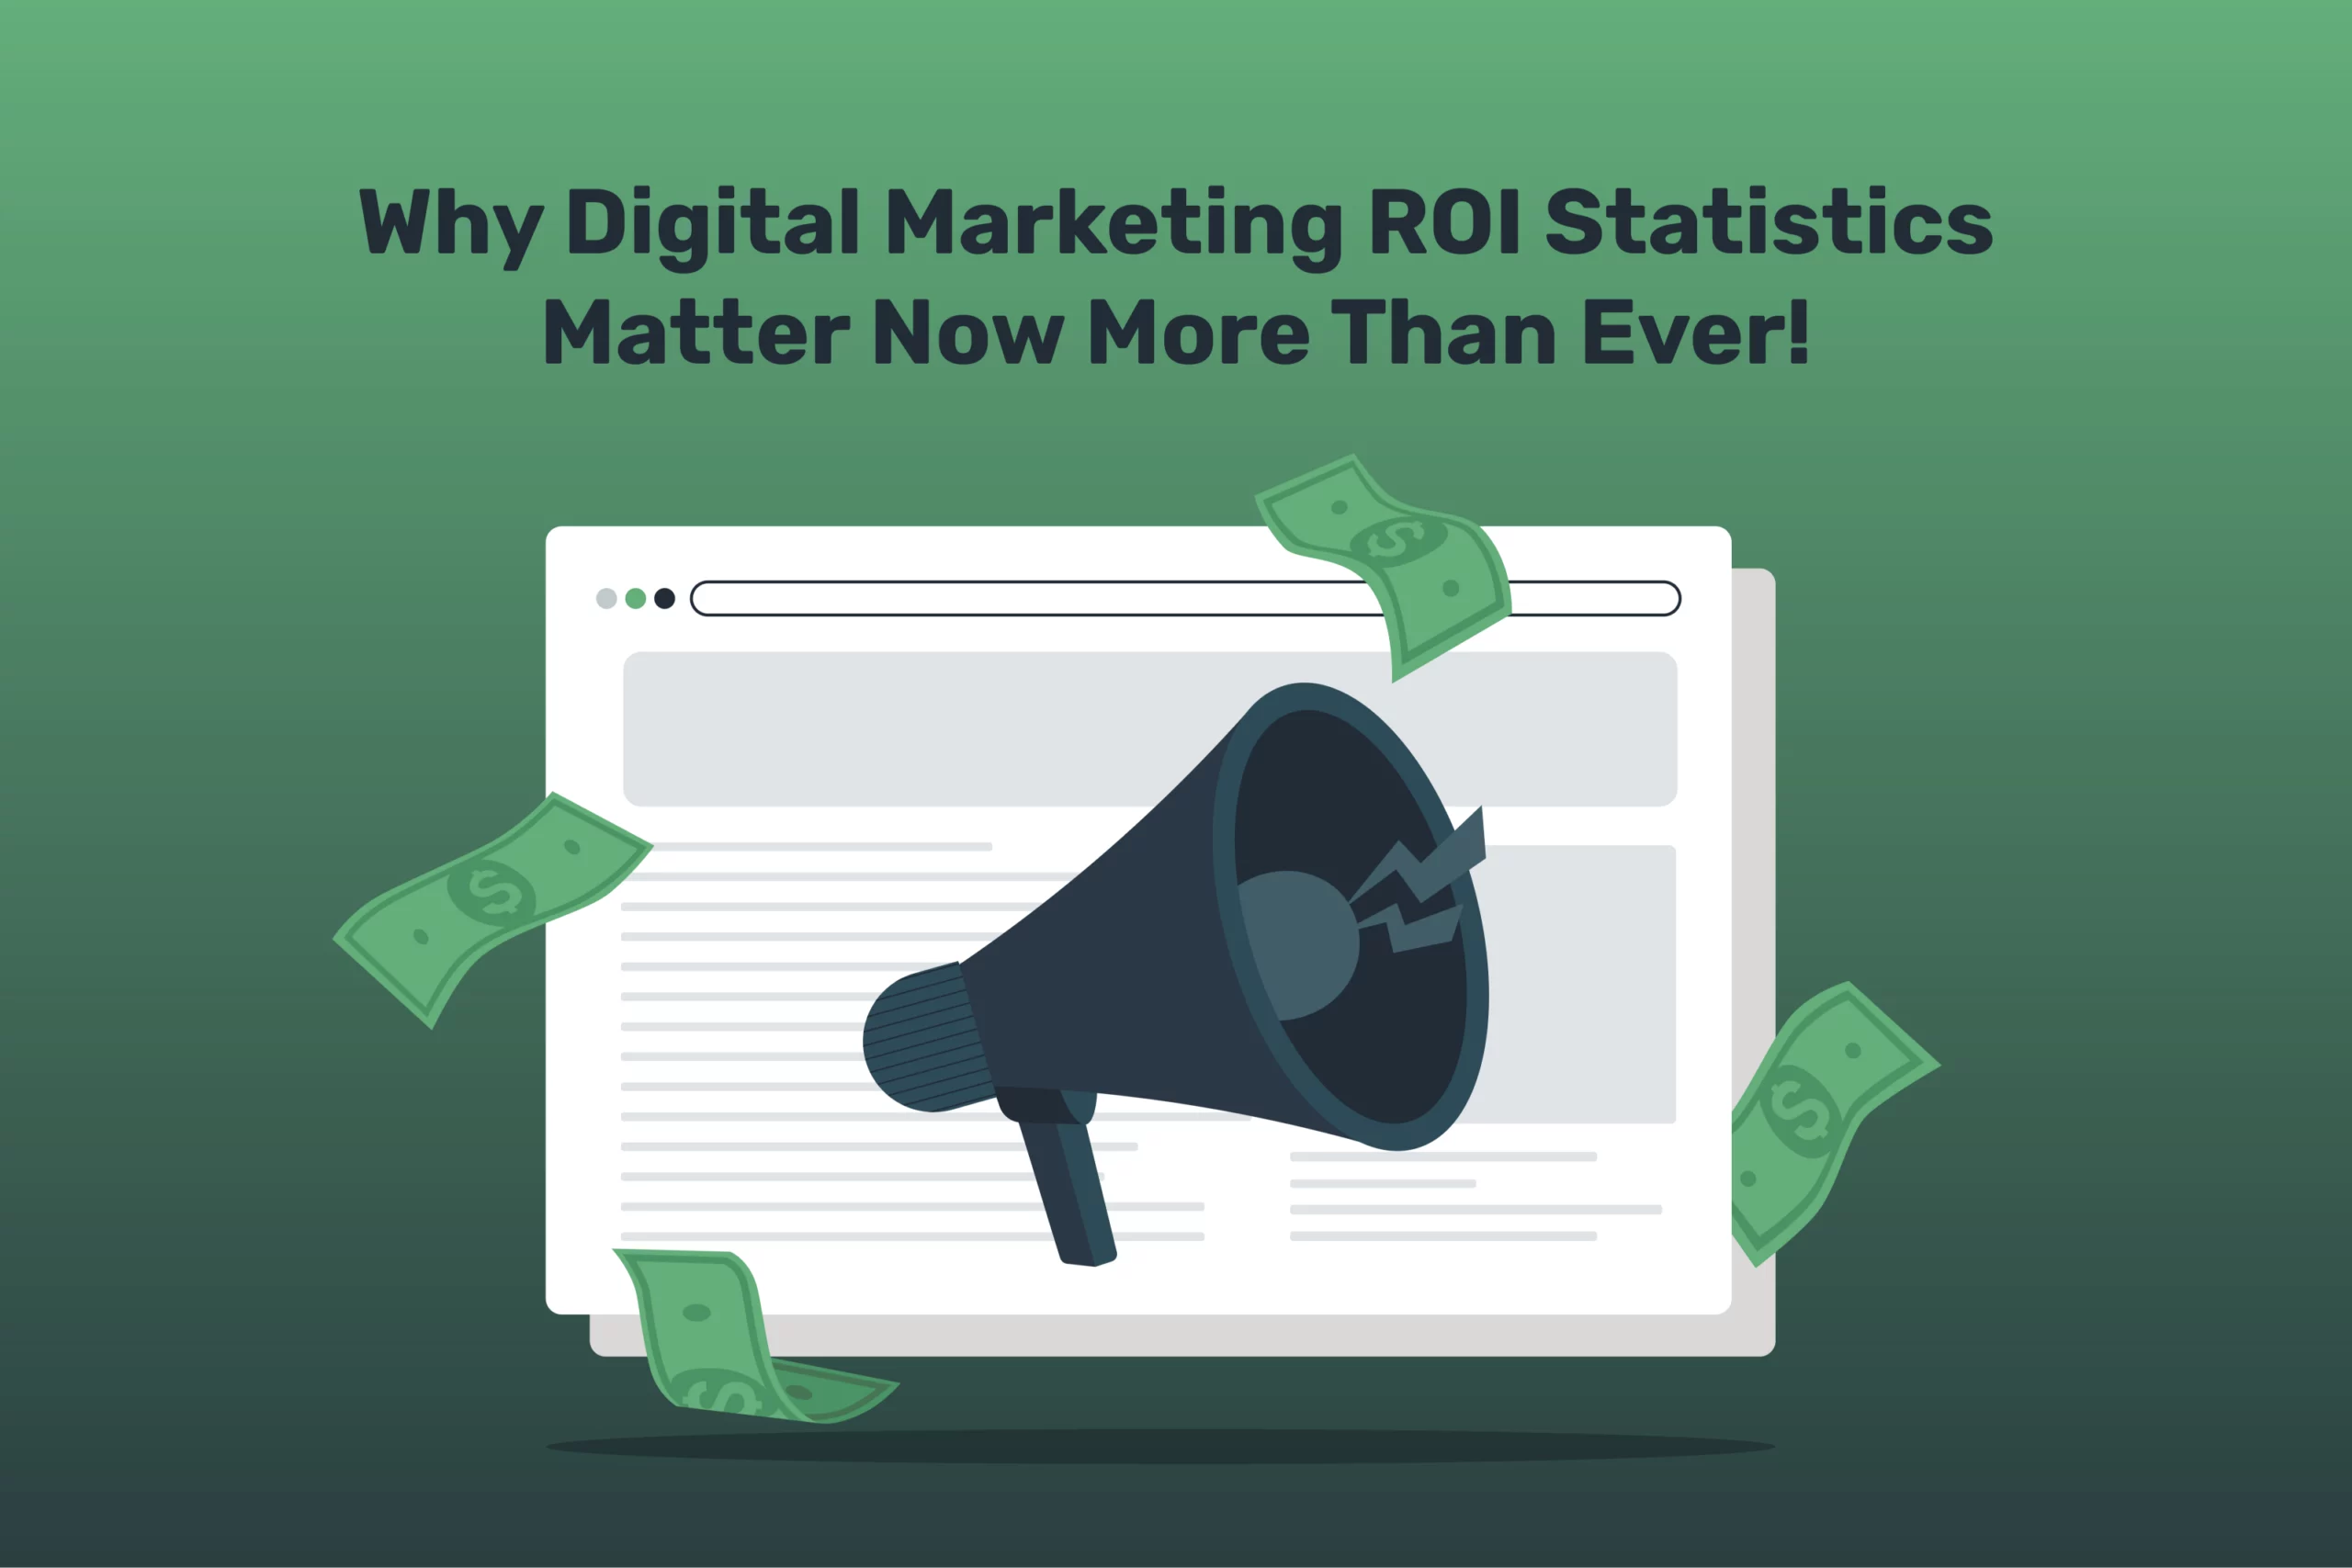 Digital Marketing ROI Statistics